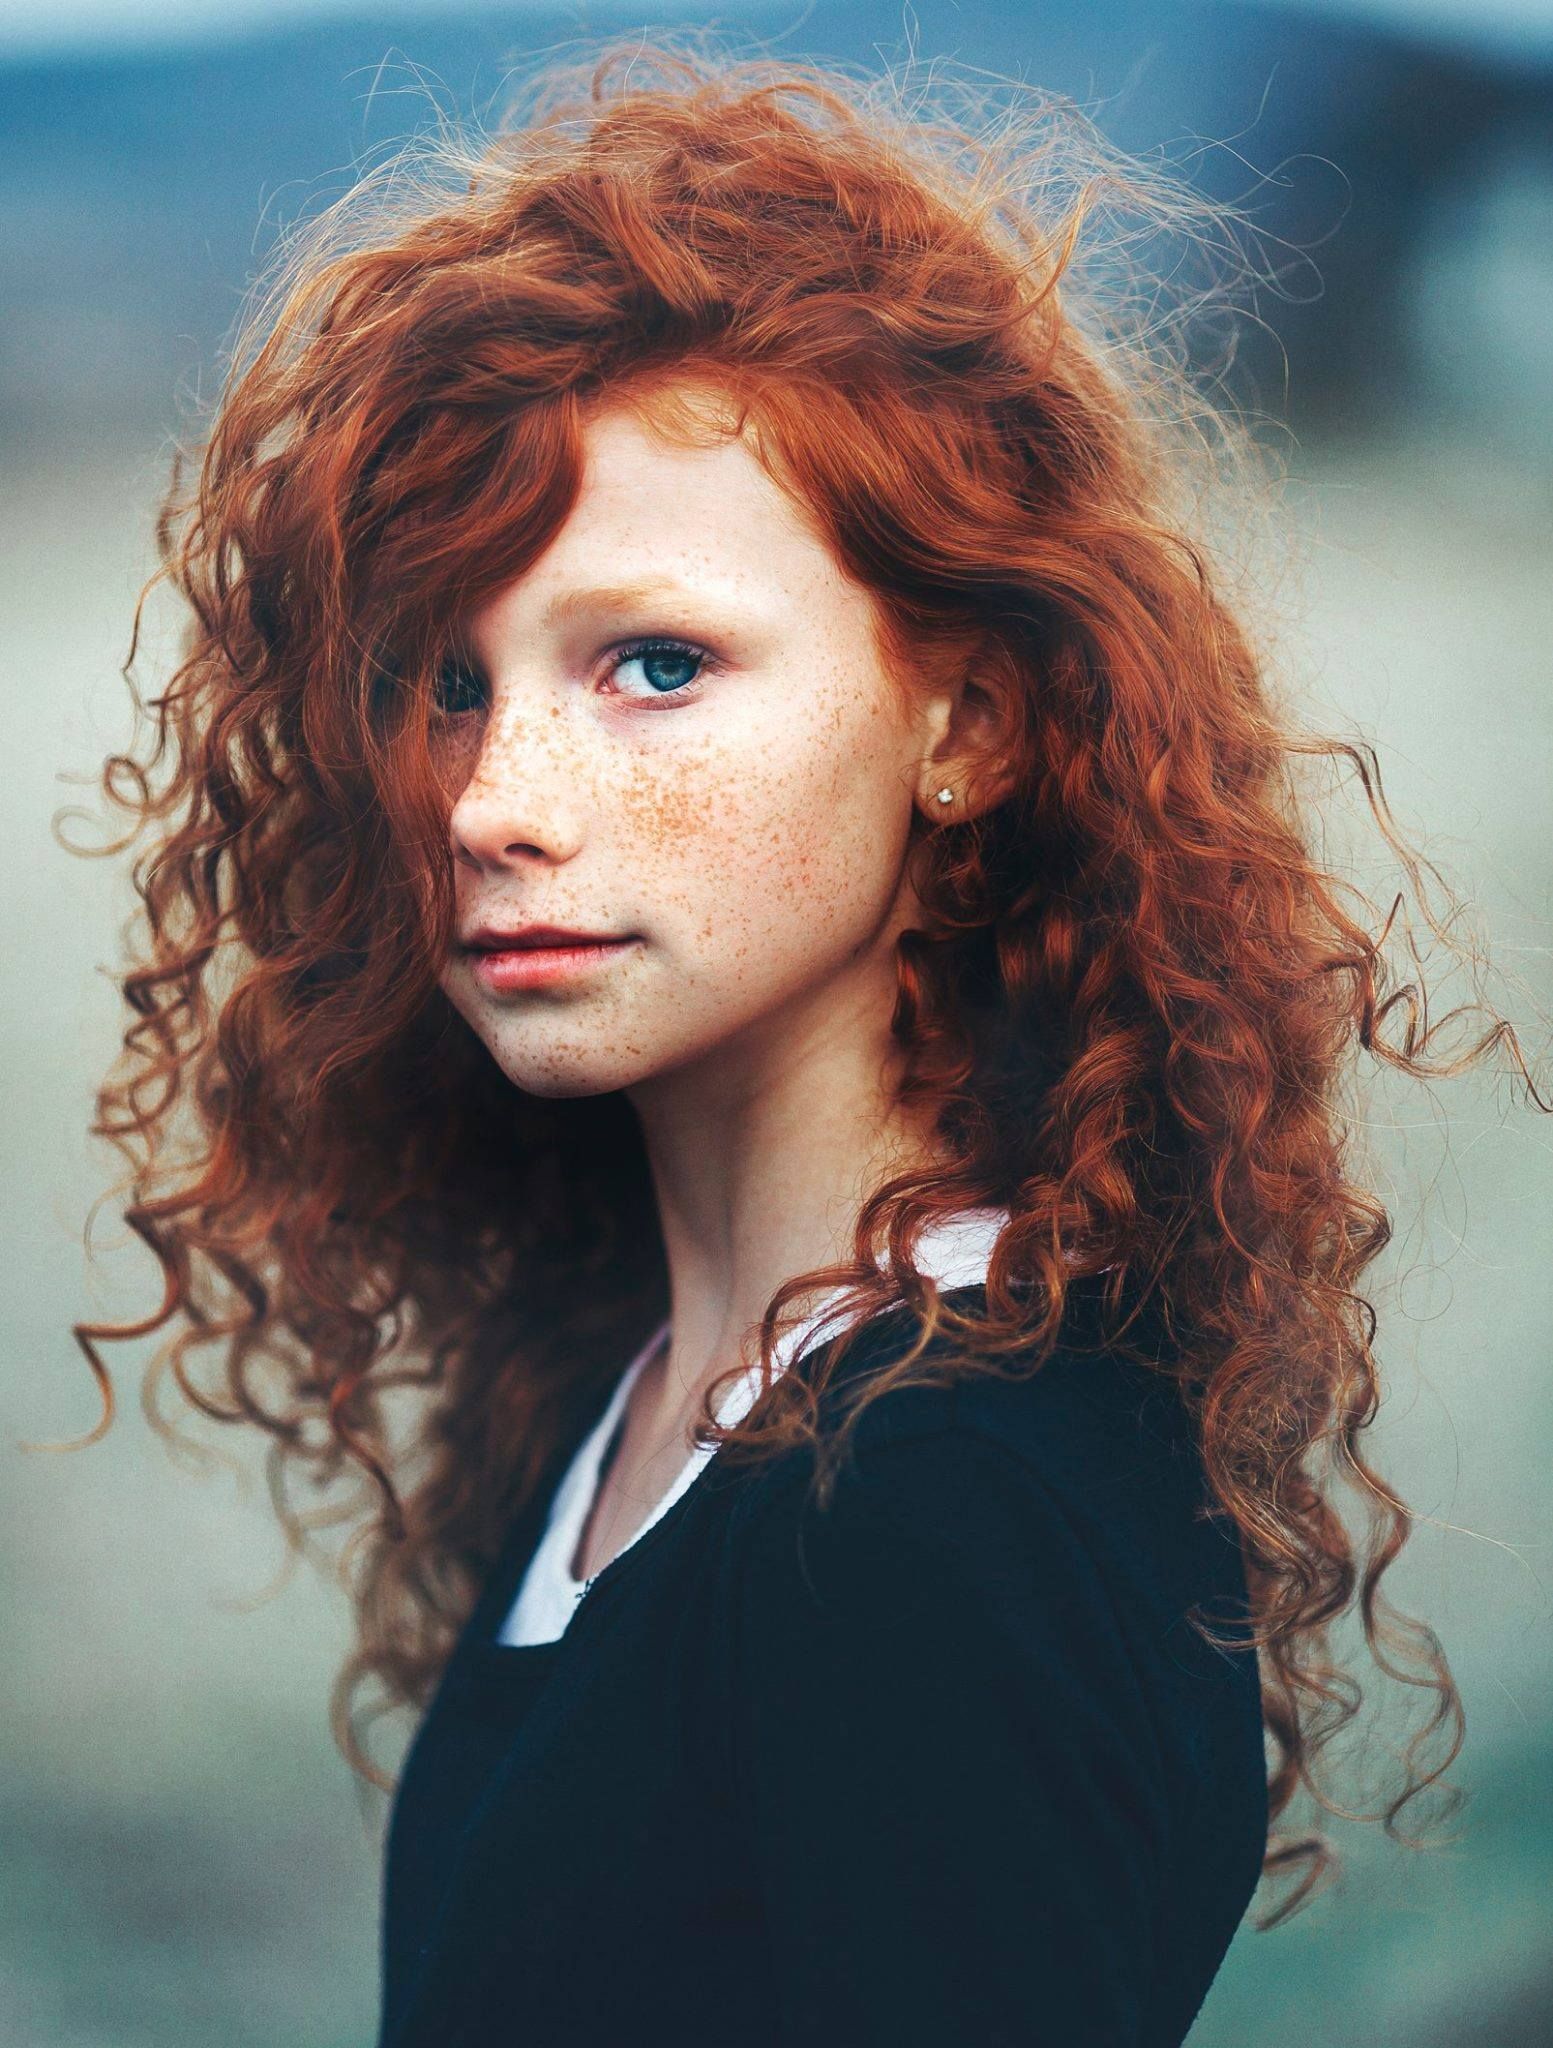 Young teen girl self shot redhead